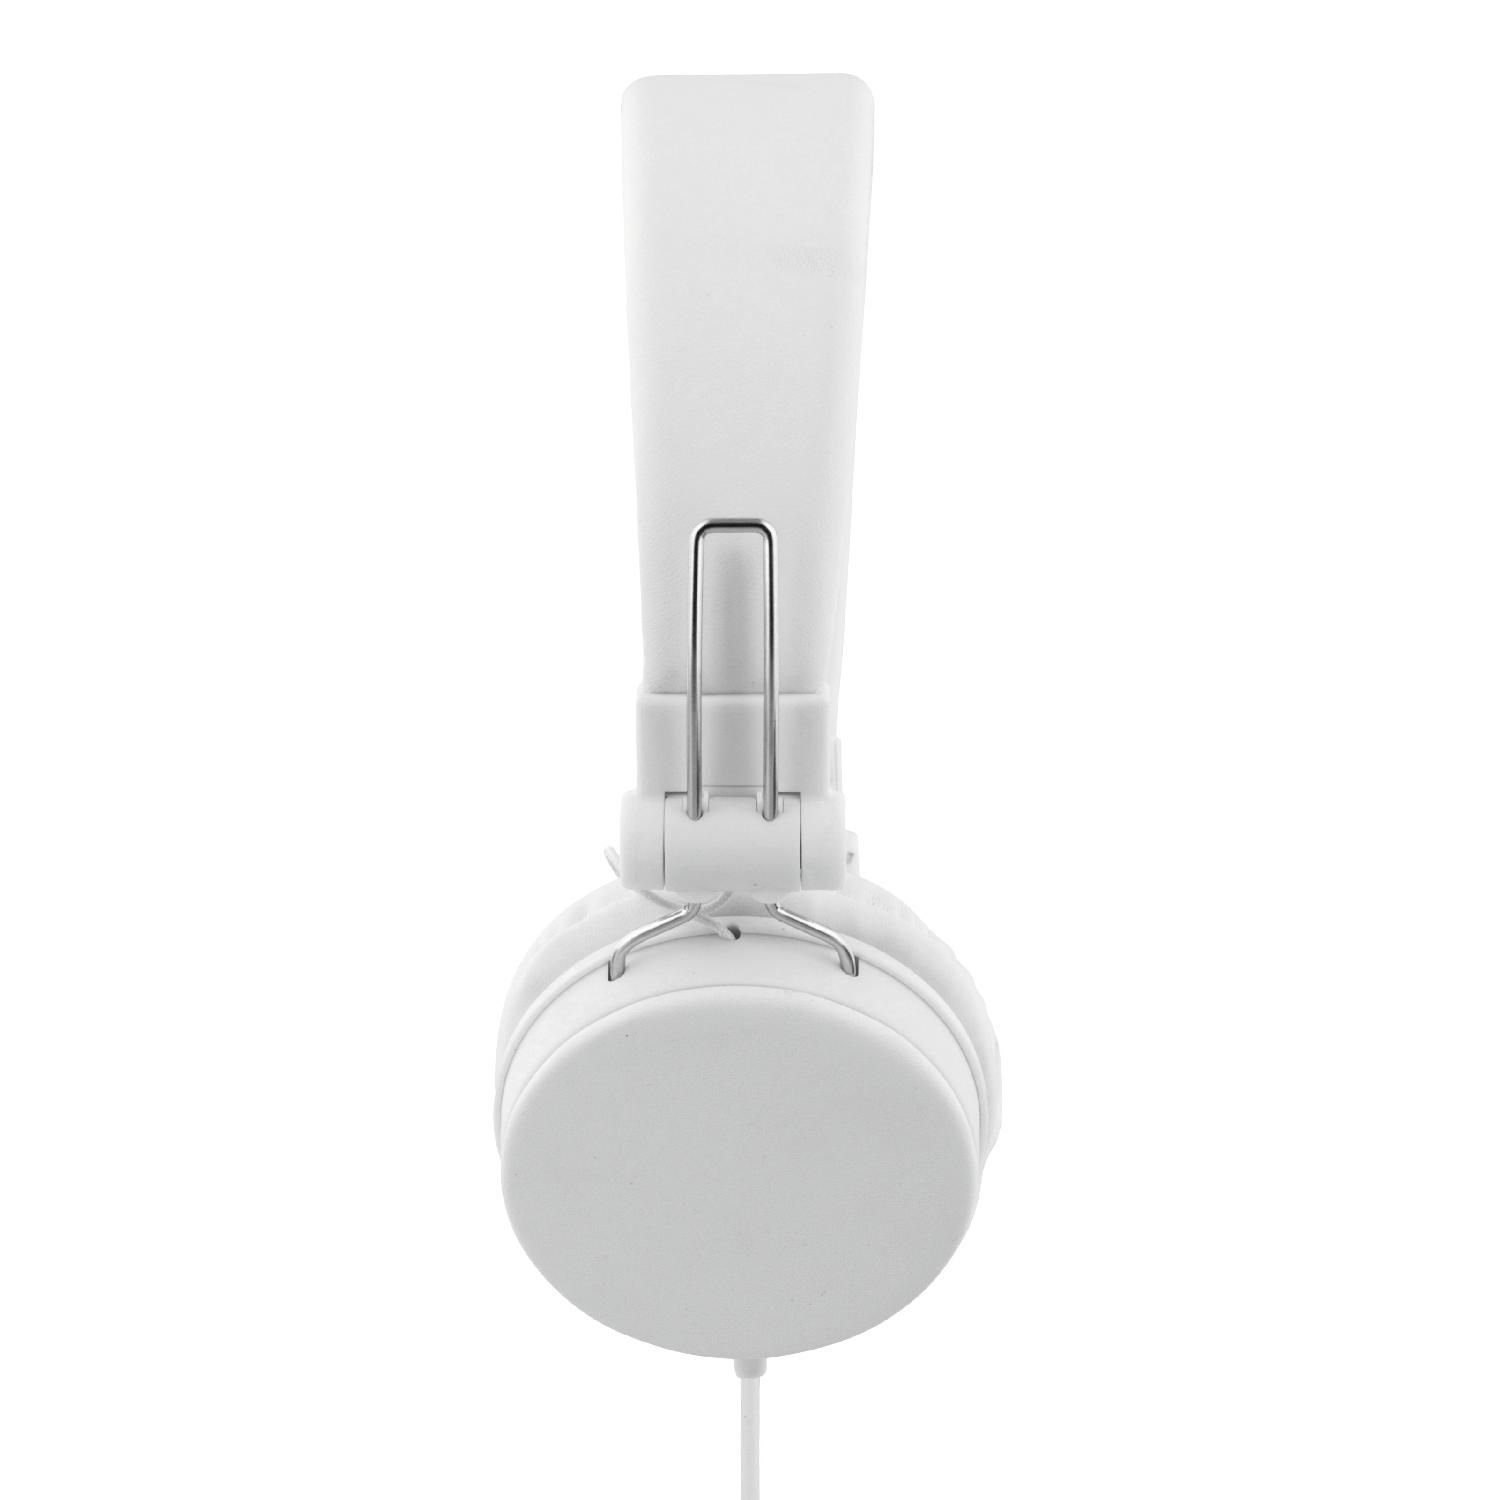 1,2m Klinkenanschluss 5 faltbares Herstellergarantie) STREETZ Kopfhörer weiß Headset, inkl. 3.5mm Kabel On-Ear-Kopfhörer Mikrofon, (integriertes Ohrpolster Jahre